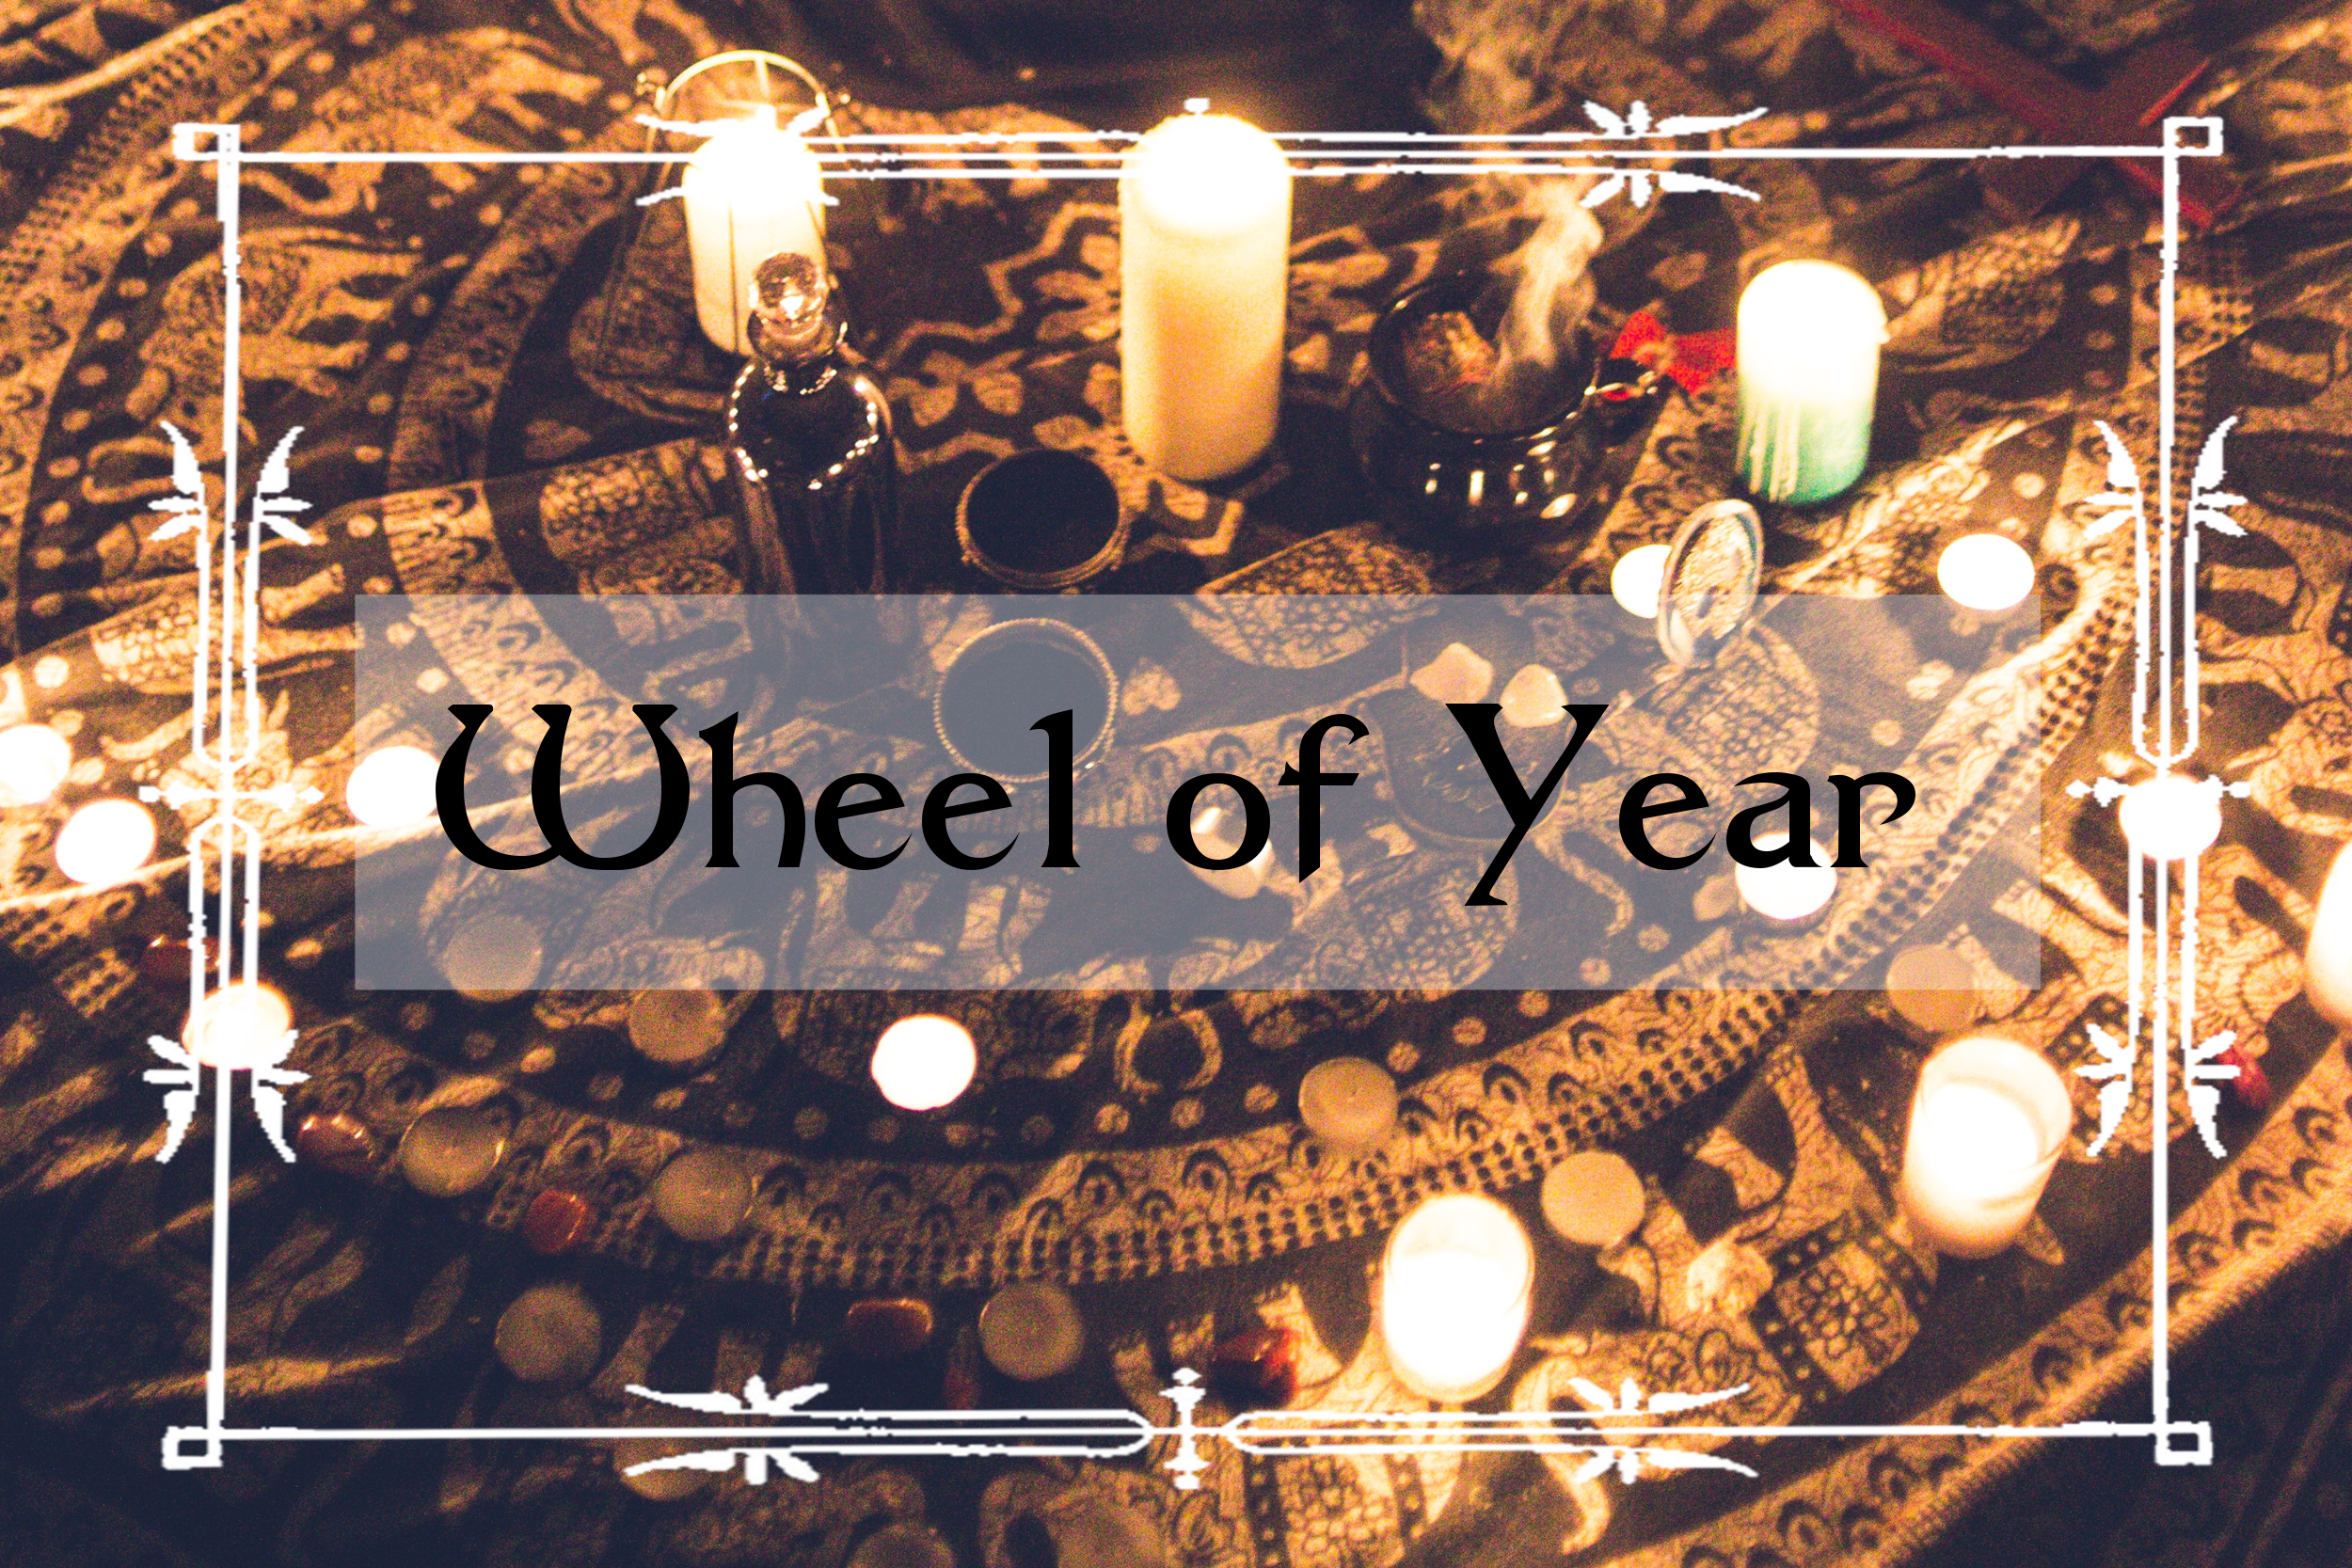 Wheel of Year